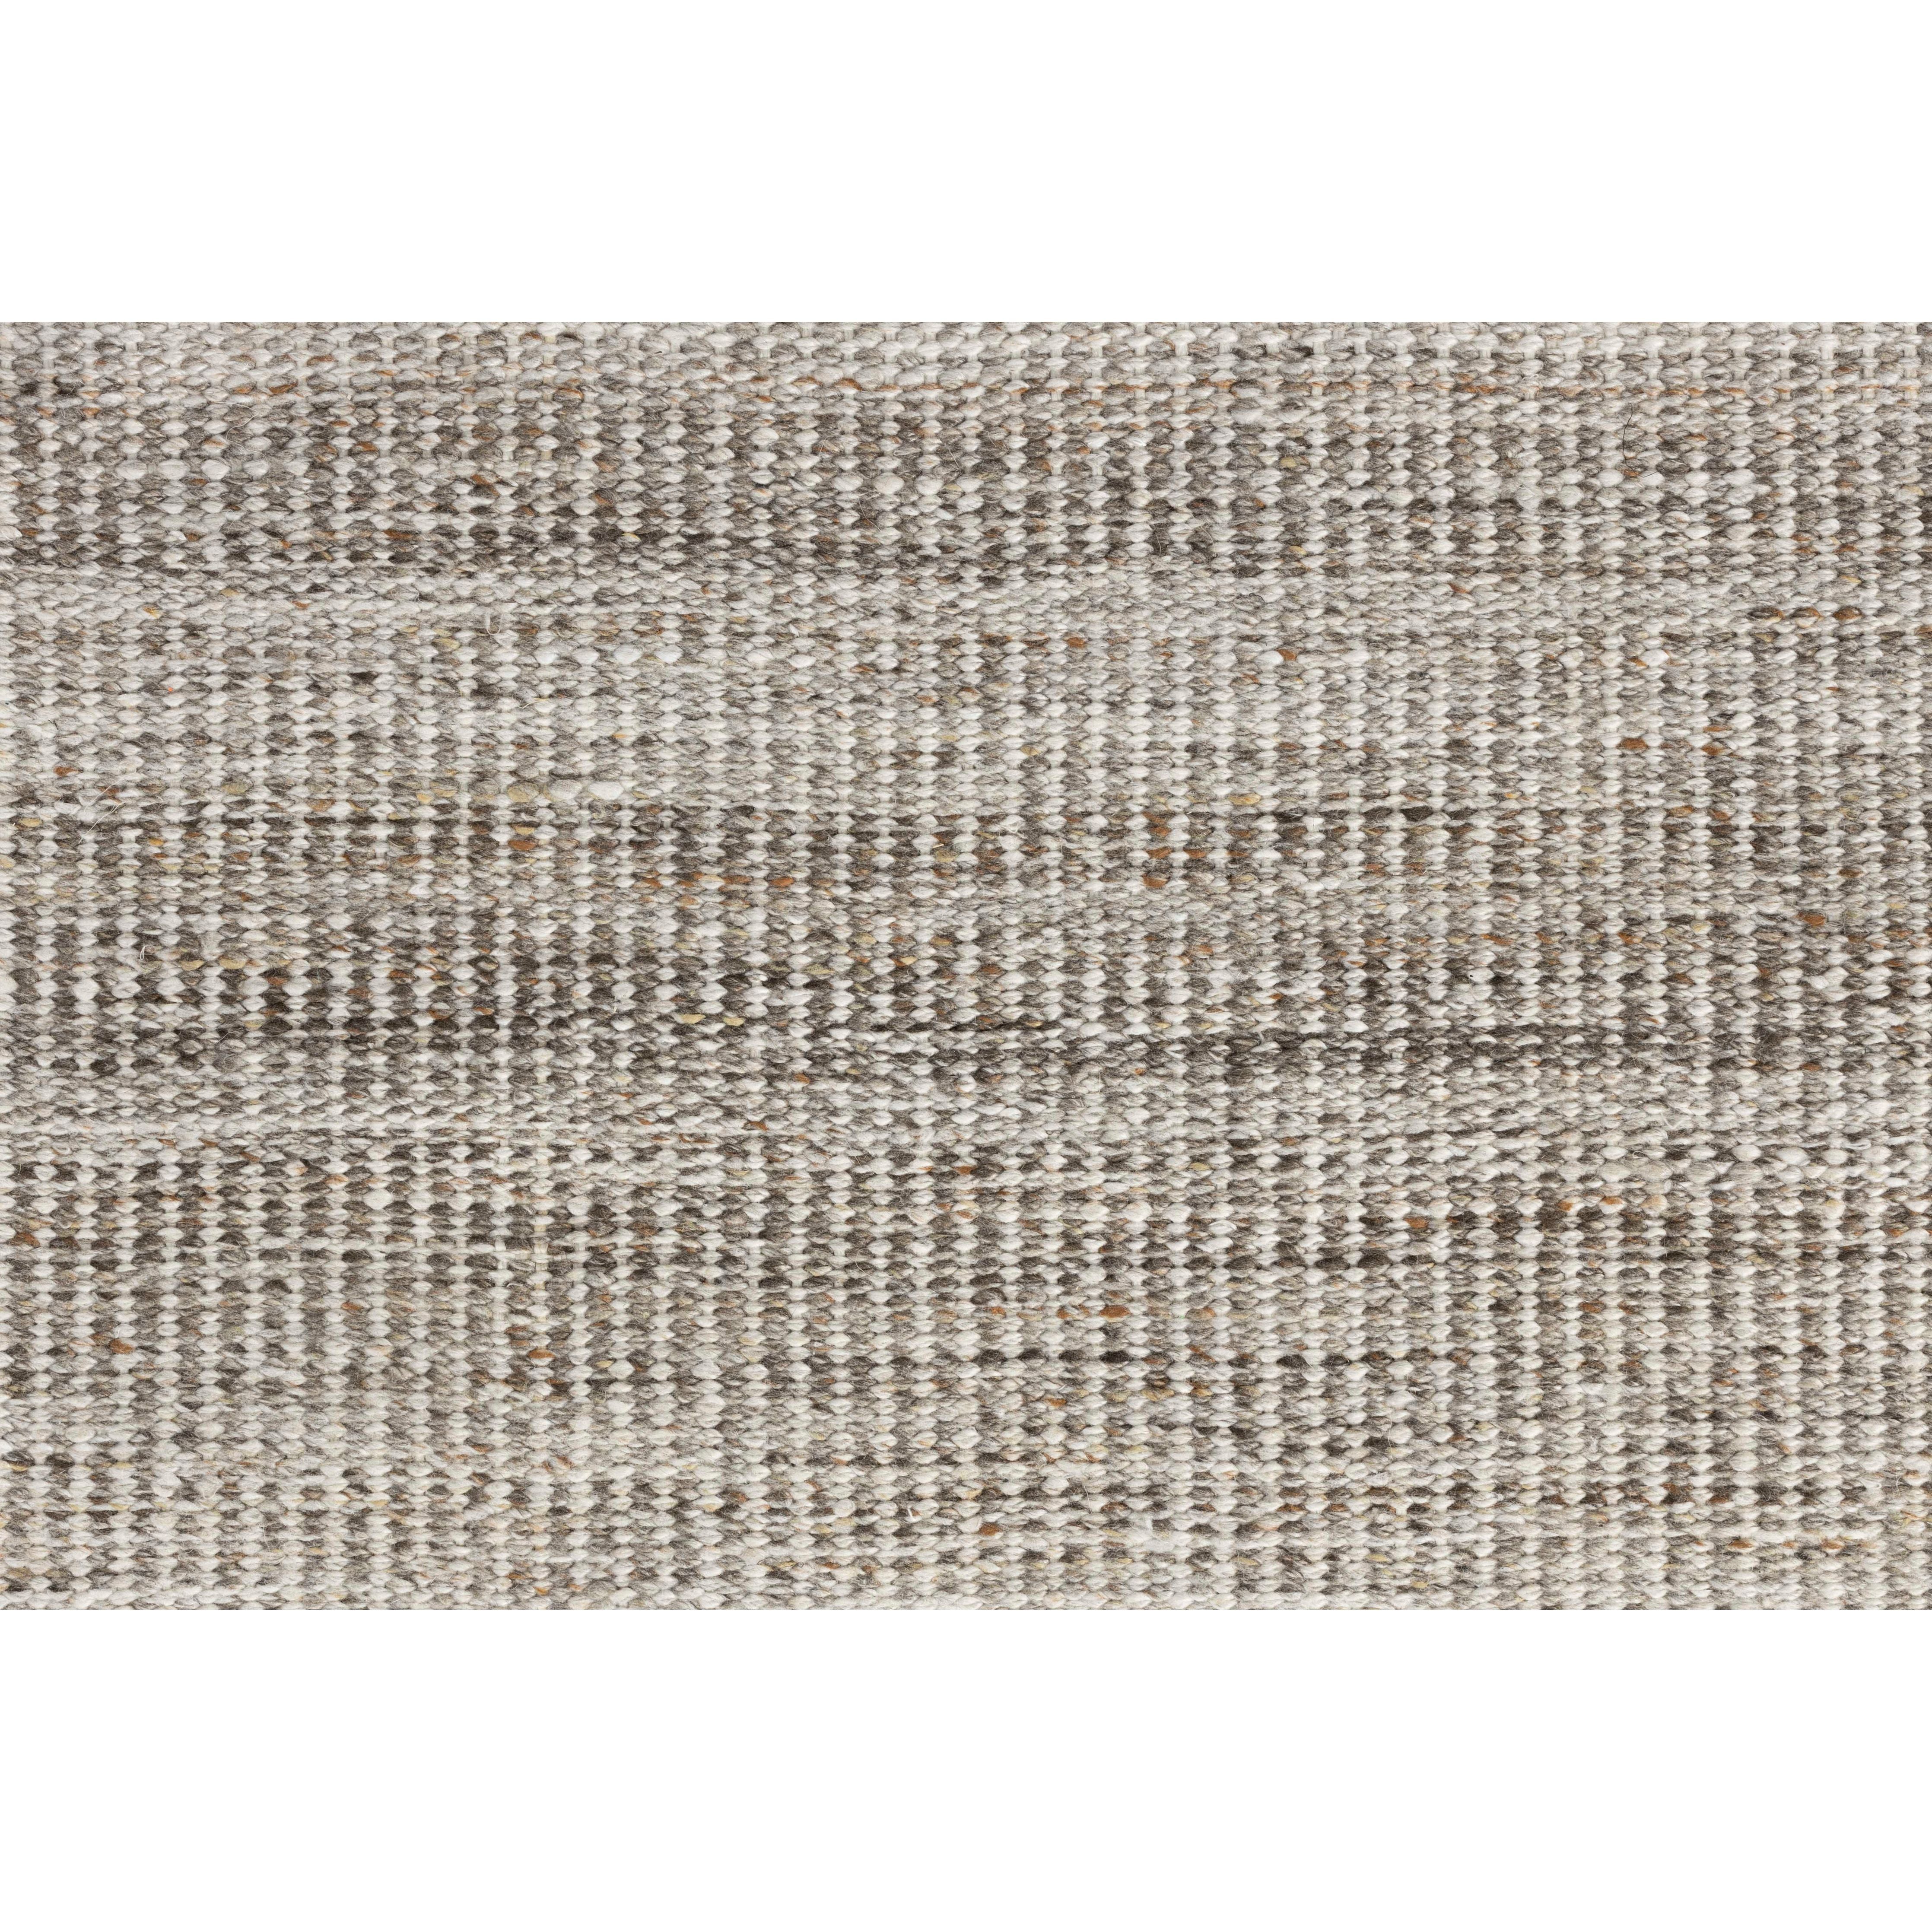 Carpet lorenzo 160x230 brown